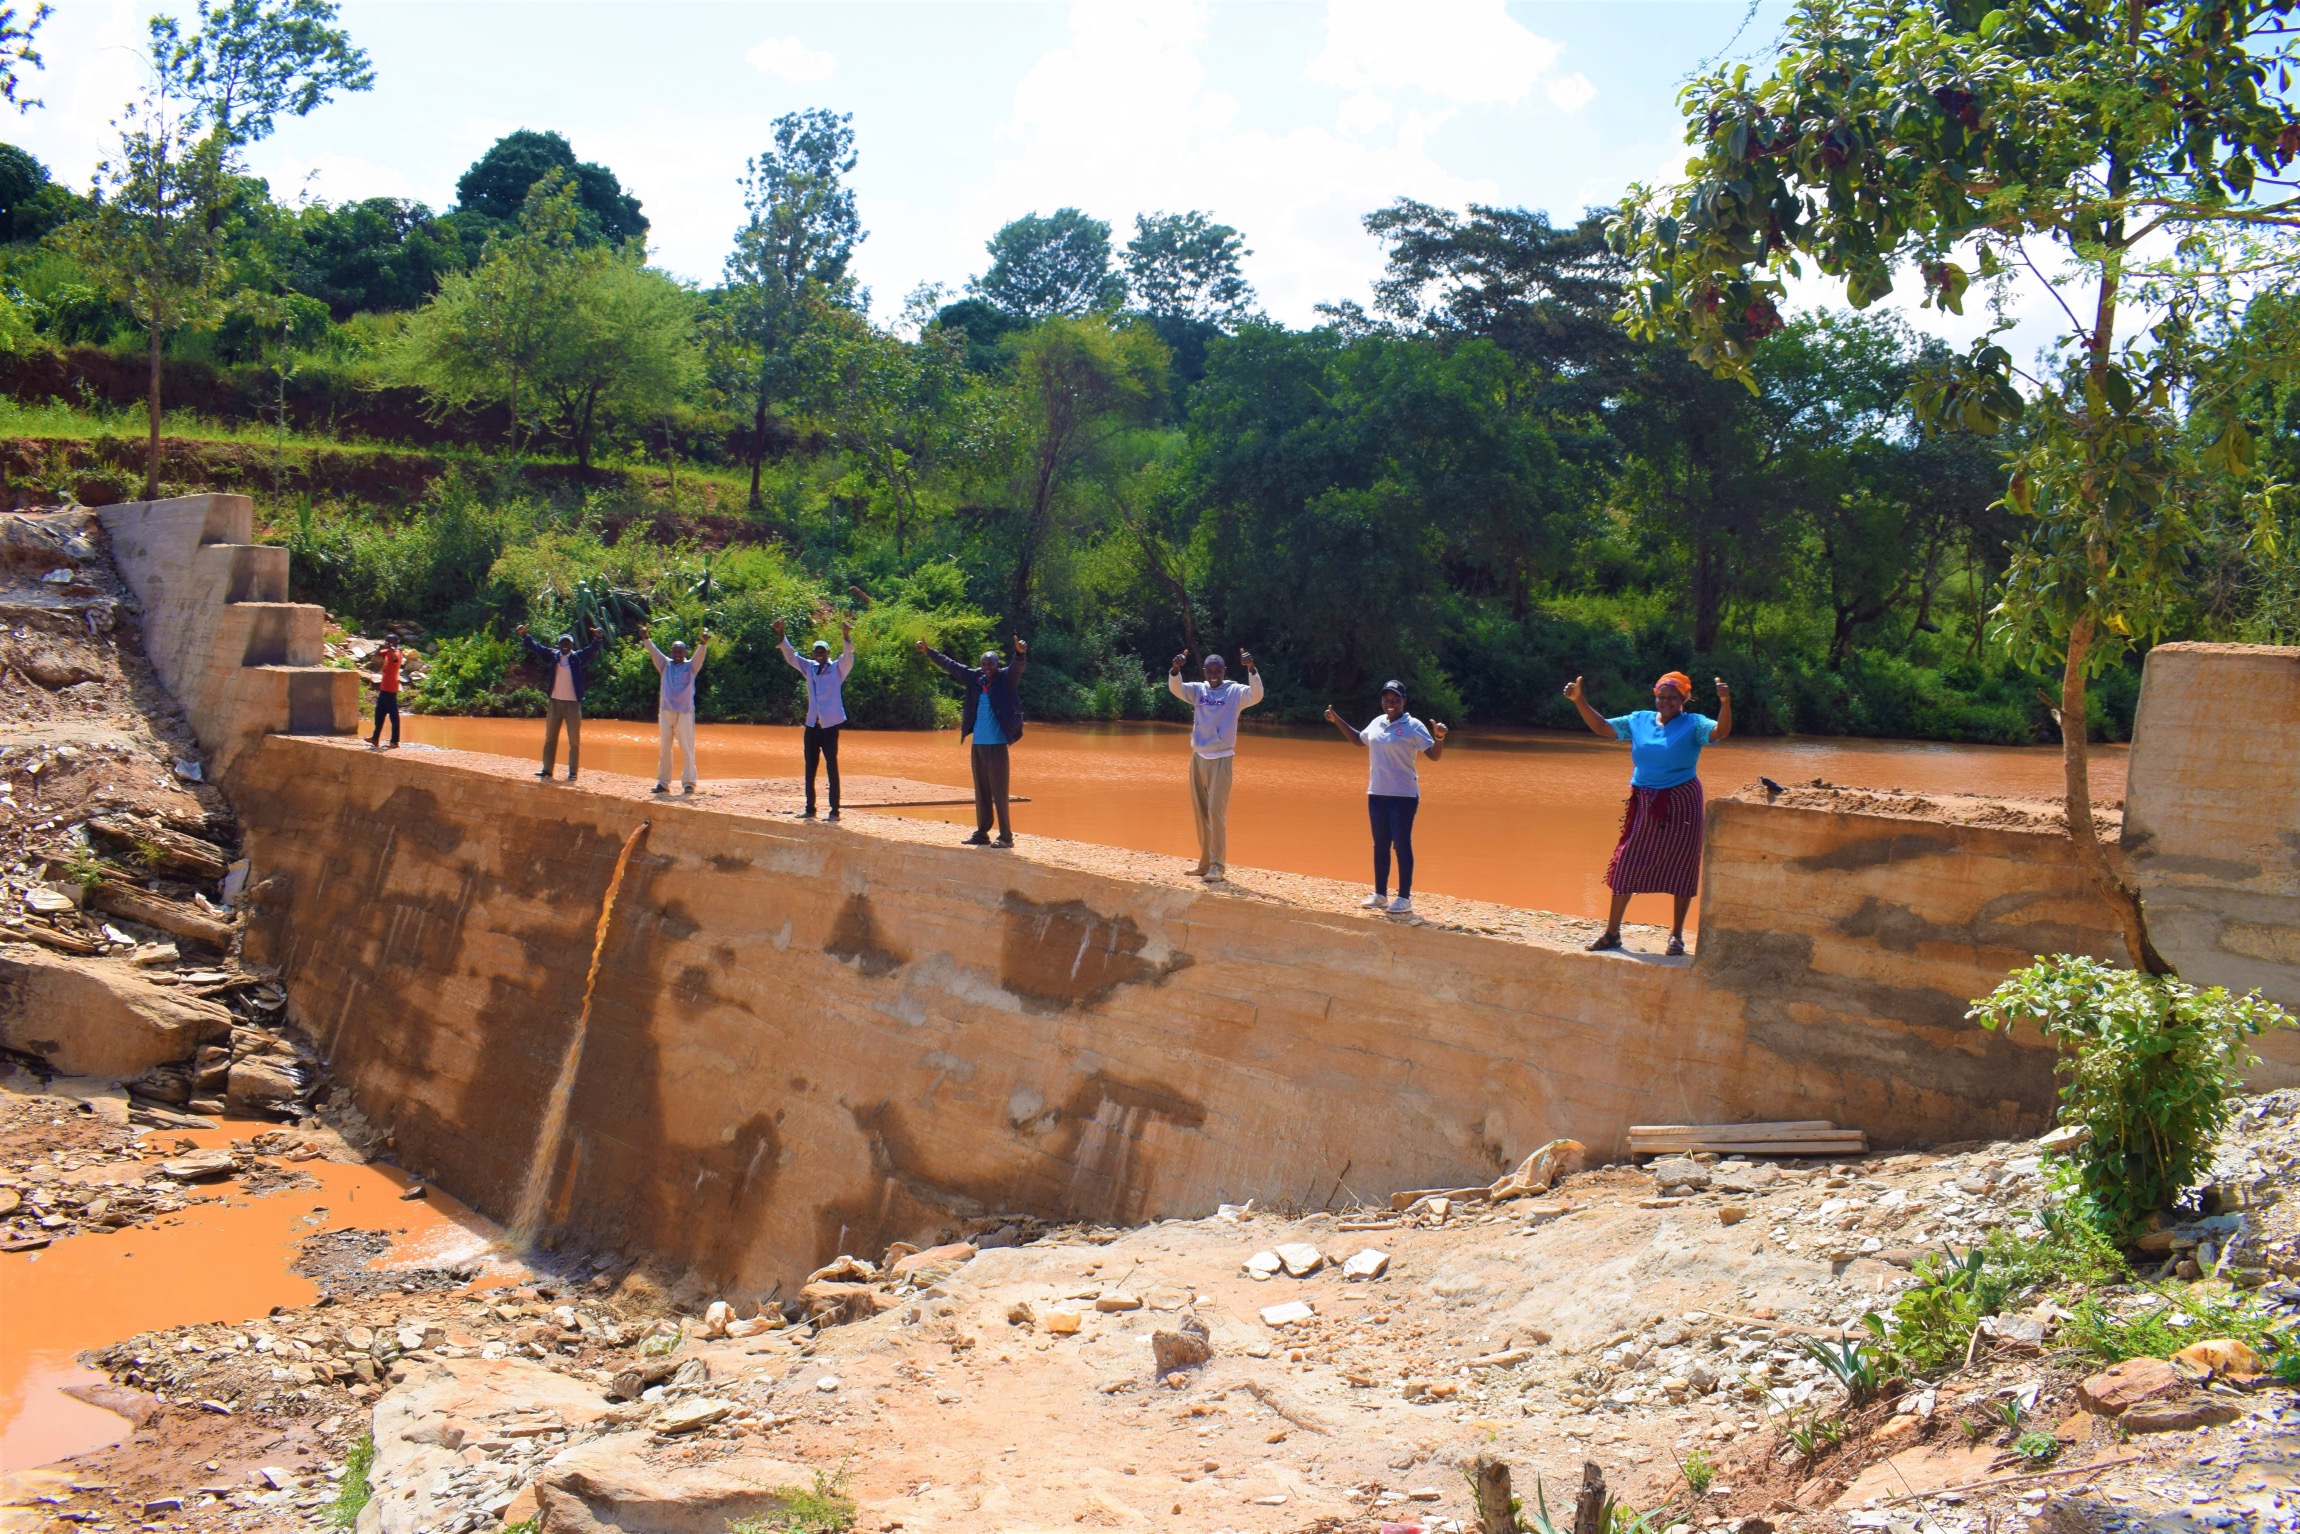 To Make Water Last, Kenyans Build Sand Dams